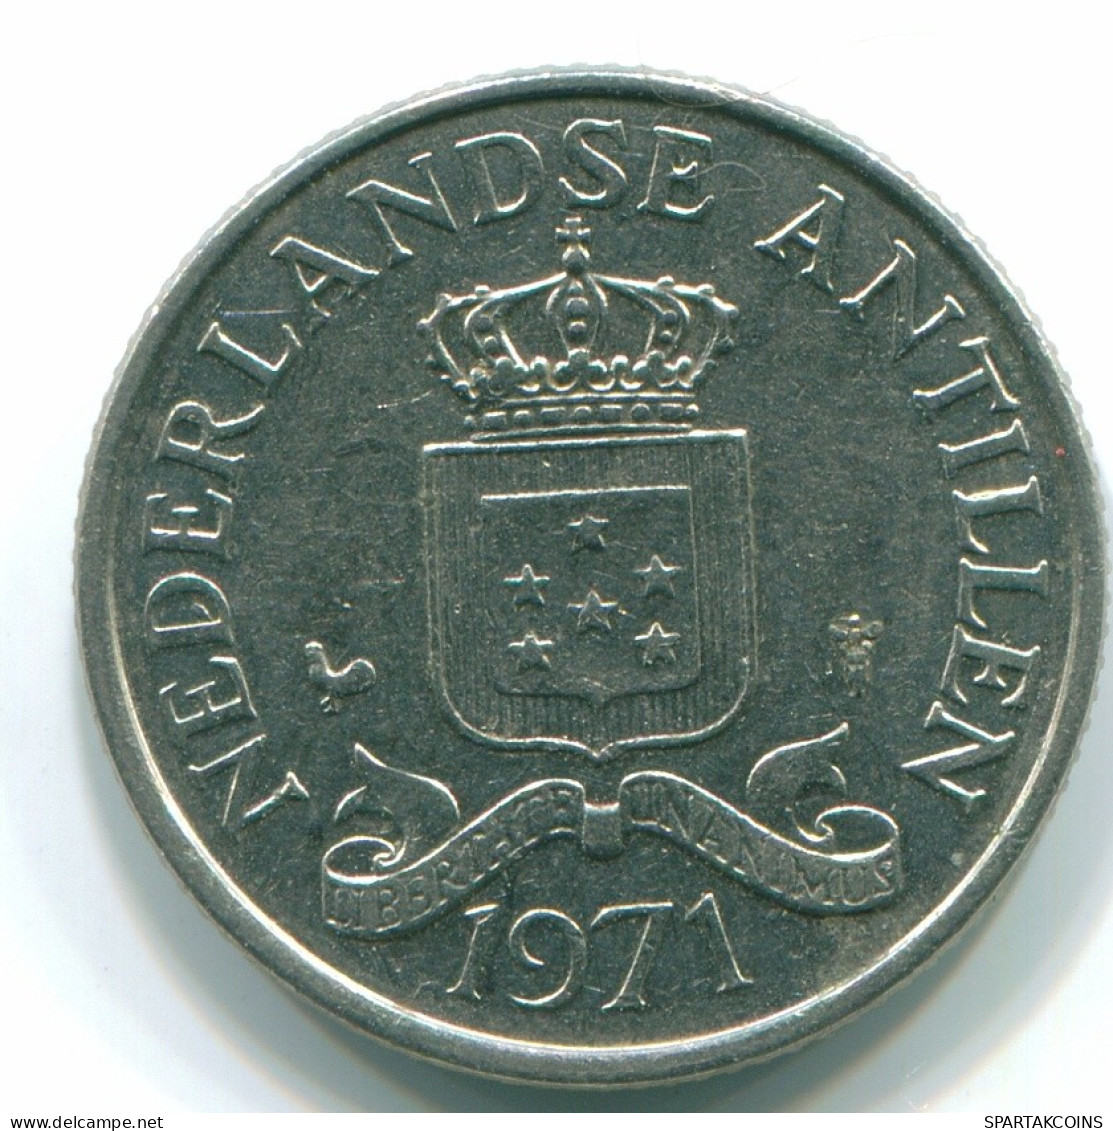 25 CENTS 1971 NIEDERLÄNDISCHE ANTILLEN Nickel Koloniale Münze #S11517.D.A - Nederlandse Antillen